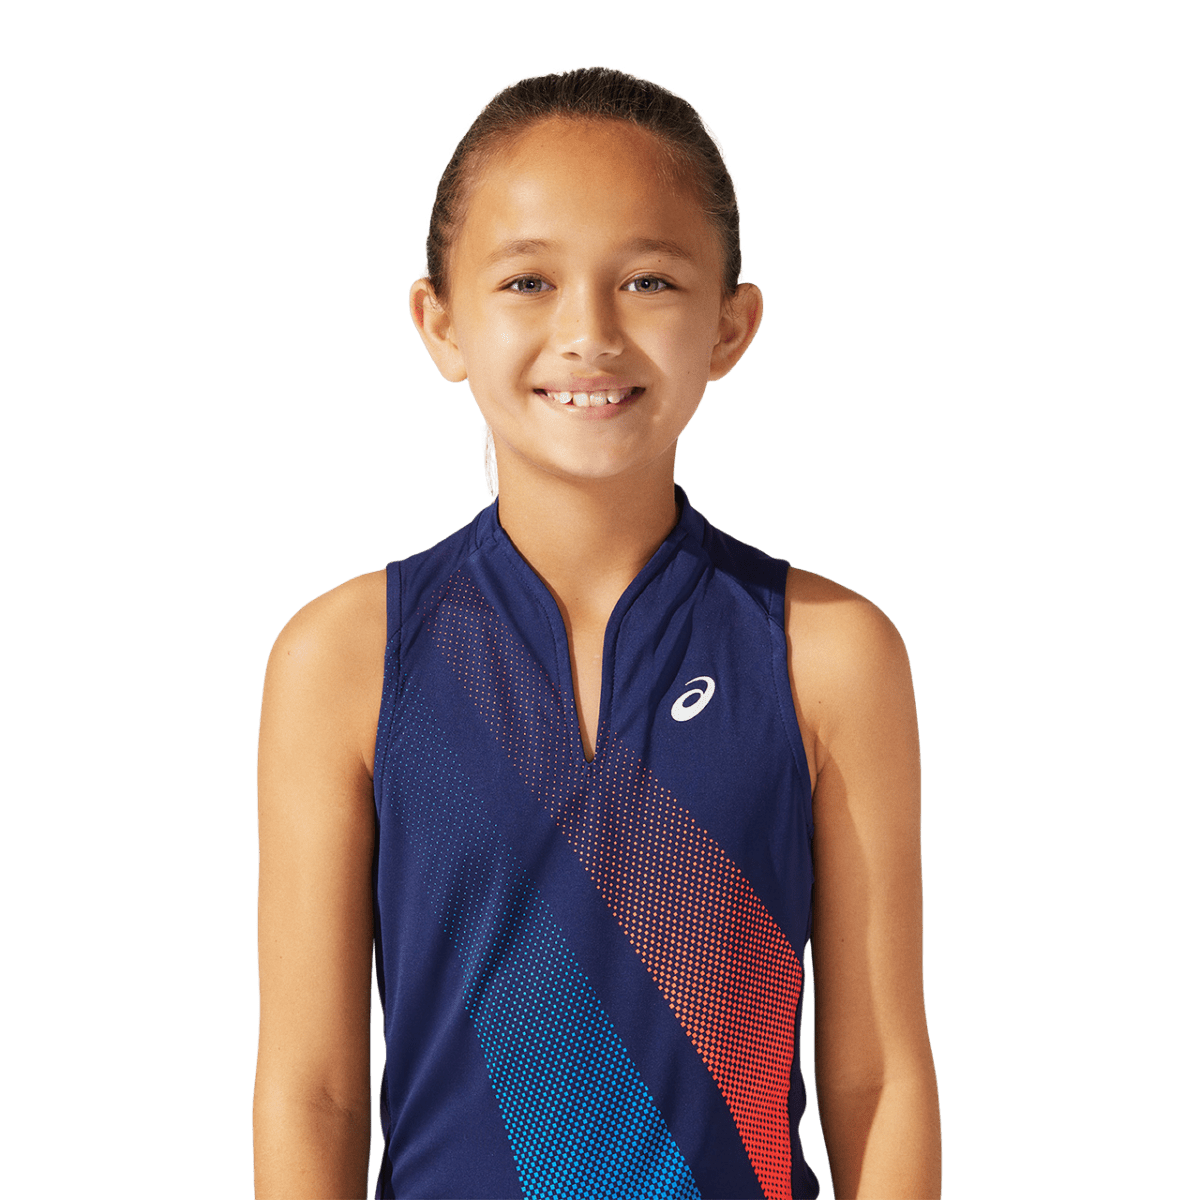 Laste treeningsärk Asics Girls Tennis Graphic Tank GS 2021 (Peacoat)